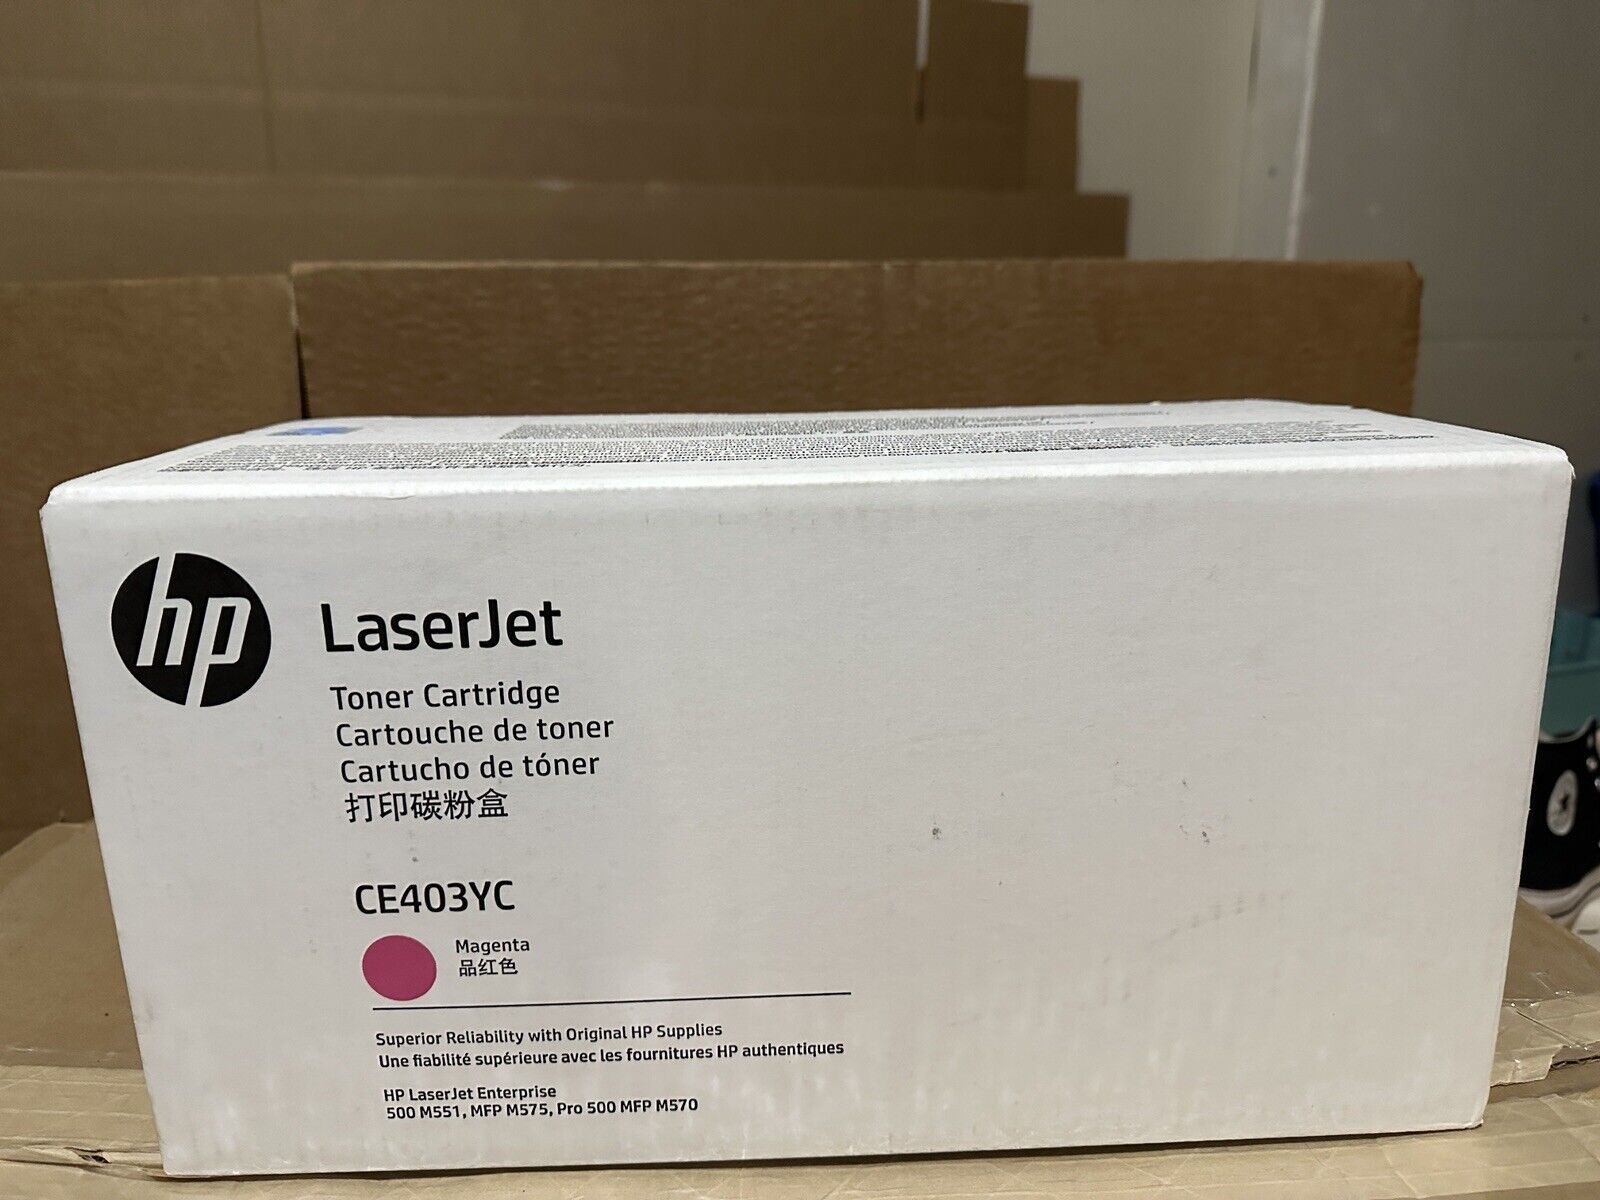 Genuine HP LaserJet CE403YC Magenta Laser Toner Cartridge